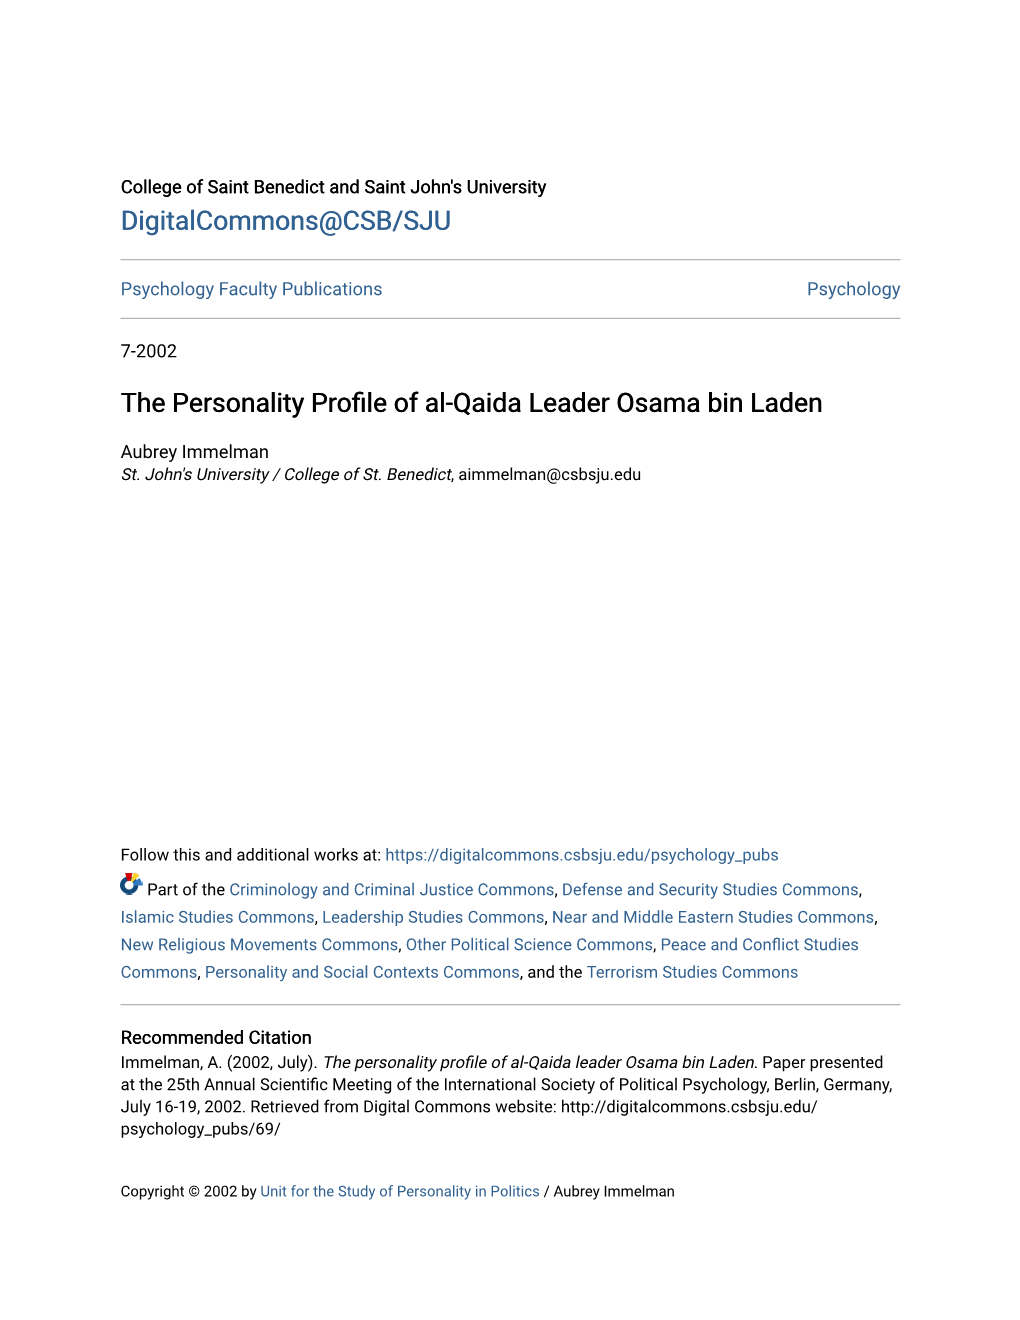 The Personality Profile of Al-Qaida Leader Osama Bin Laden